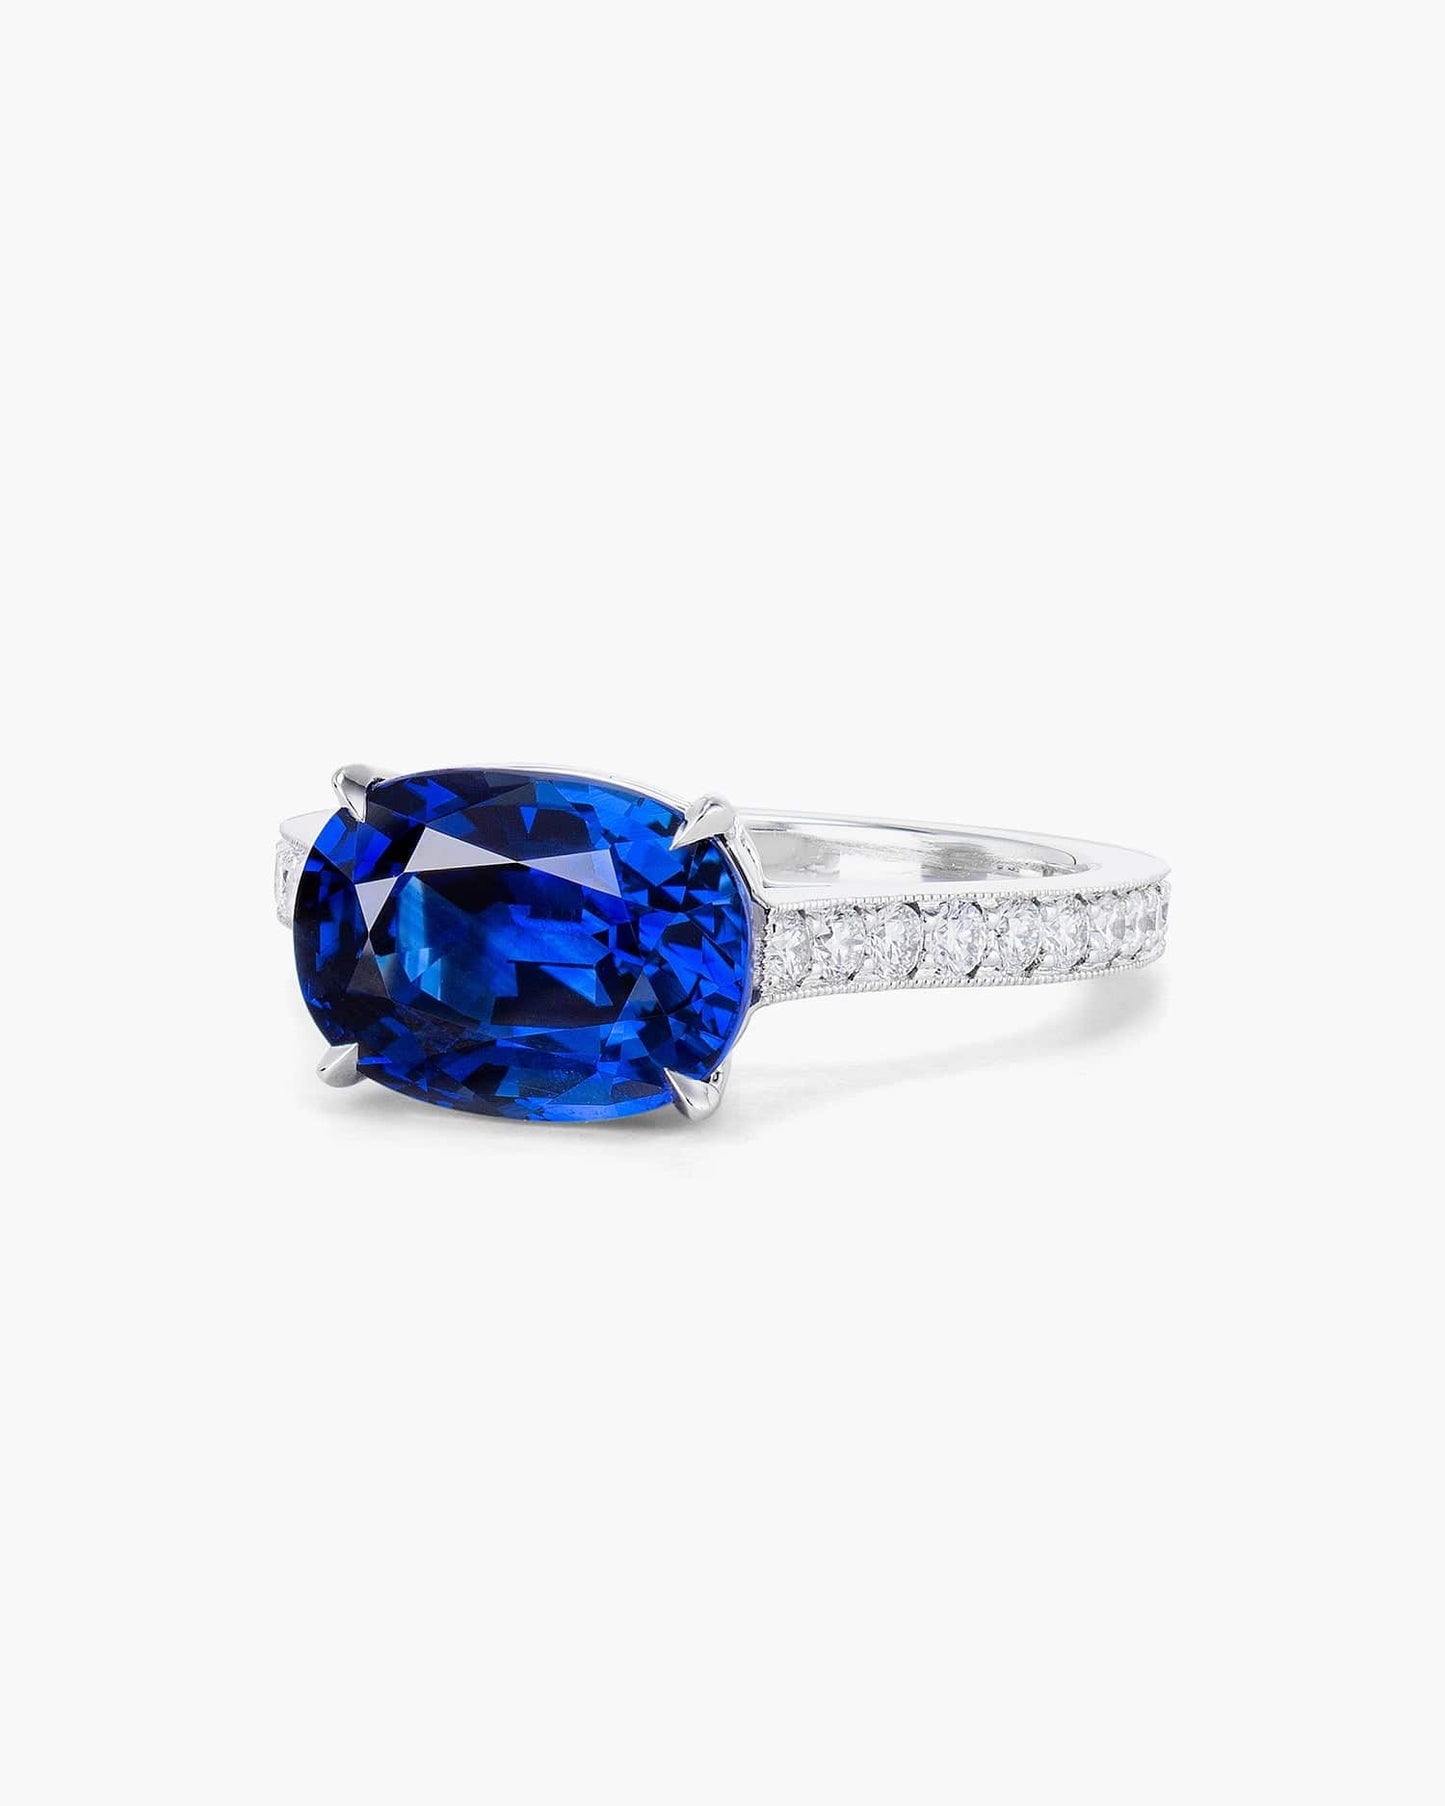 4.23 carat Oval Shape Ceylon Sapphire and Diamond Ring